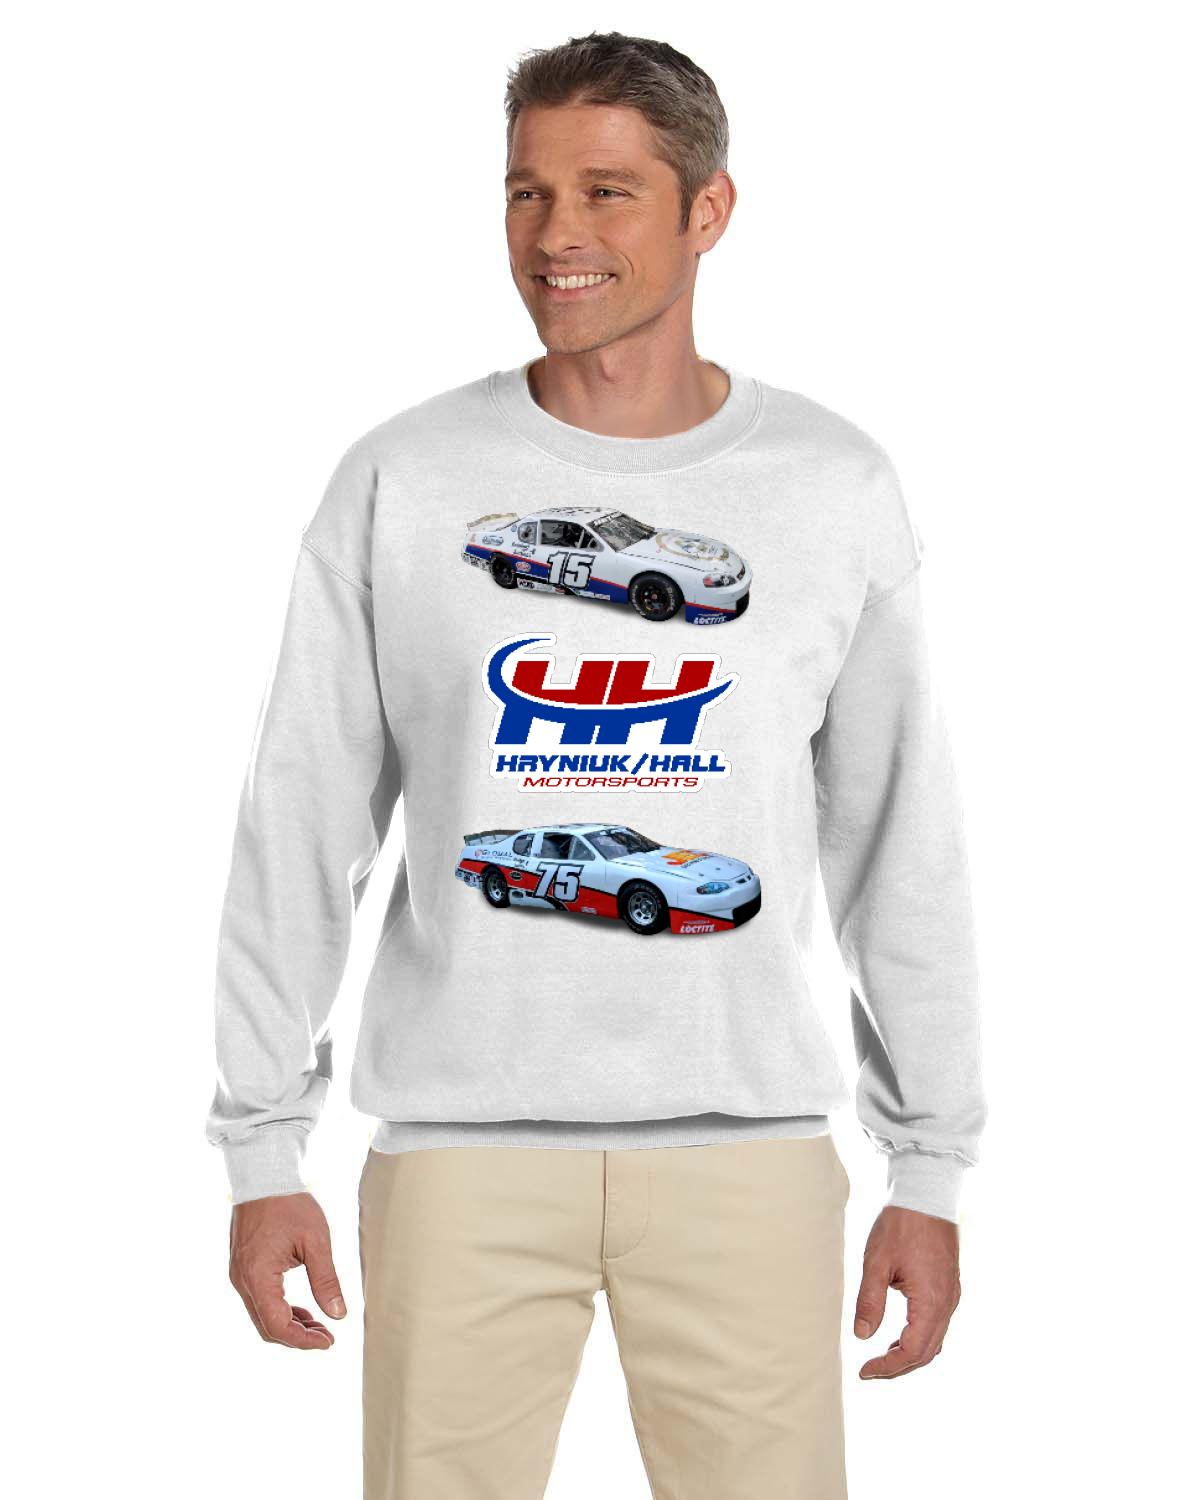 Hryniuk / Hall Motorsports Crewneck Sweater